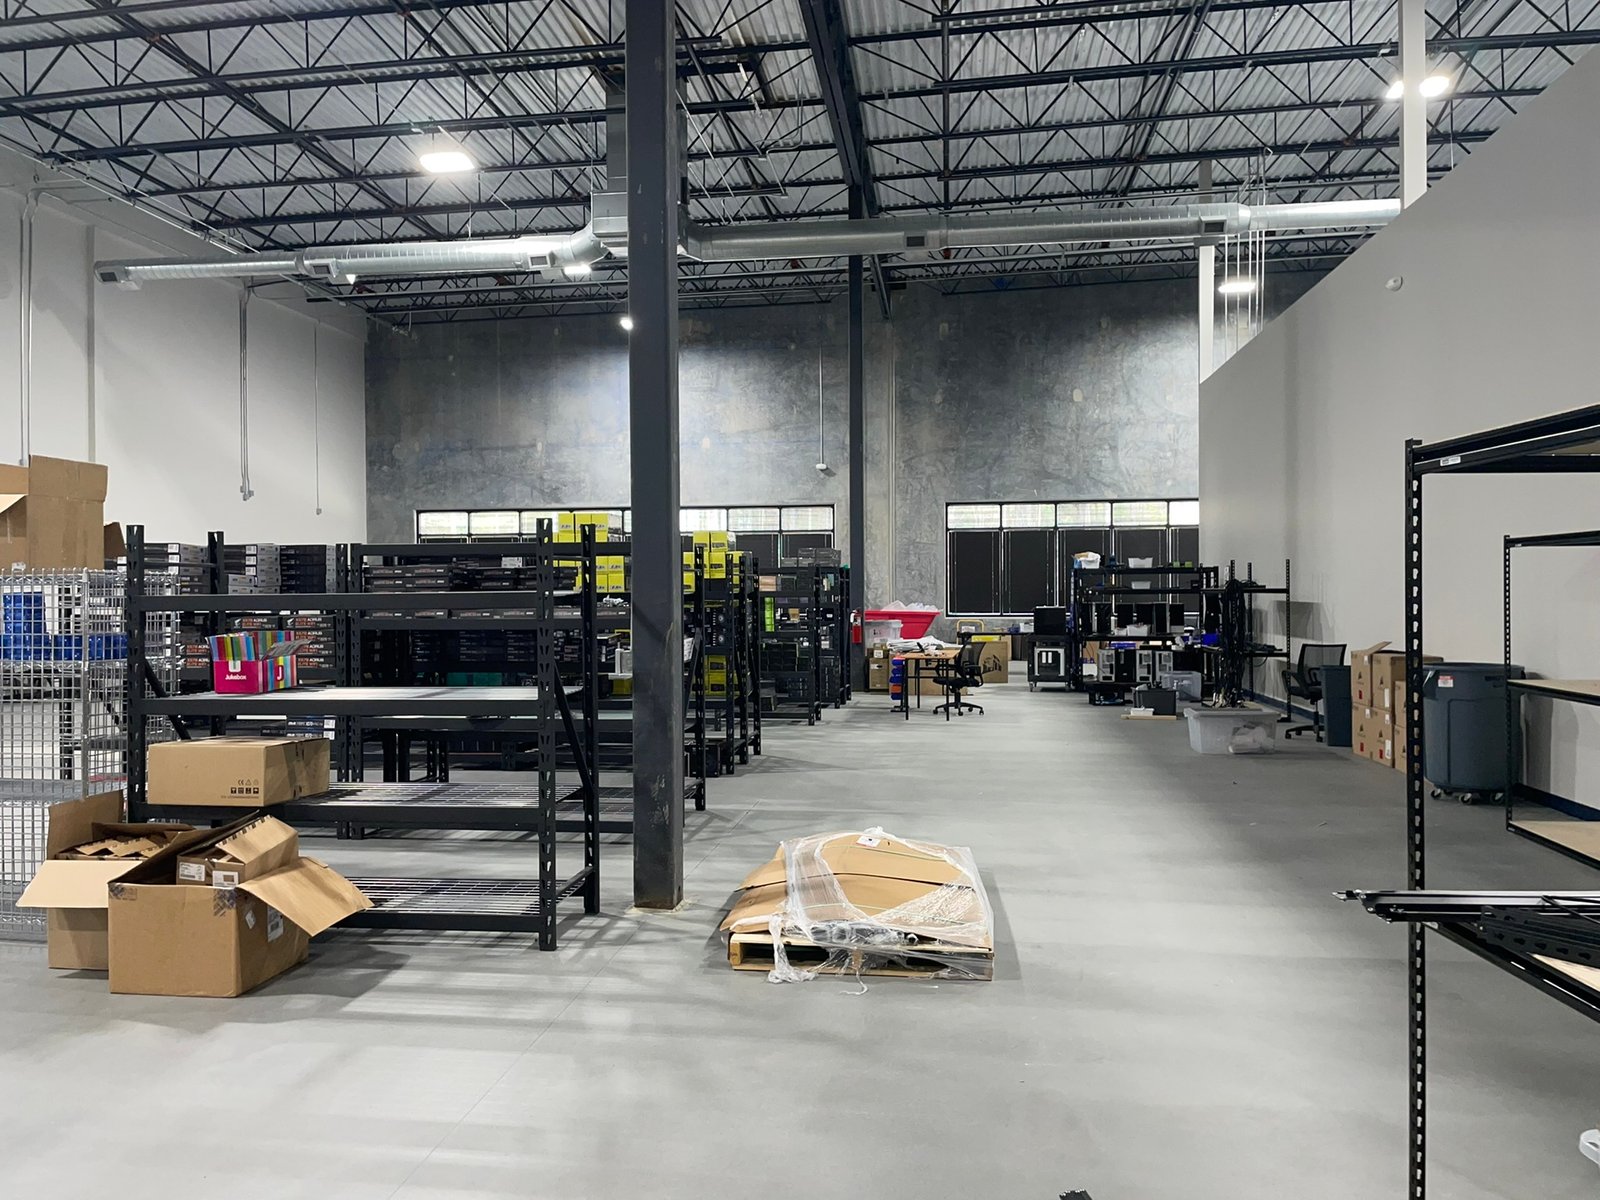 Inventory from Artesian Builds' North Carolina facility.